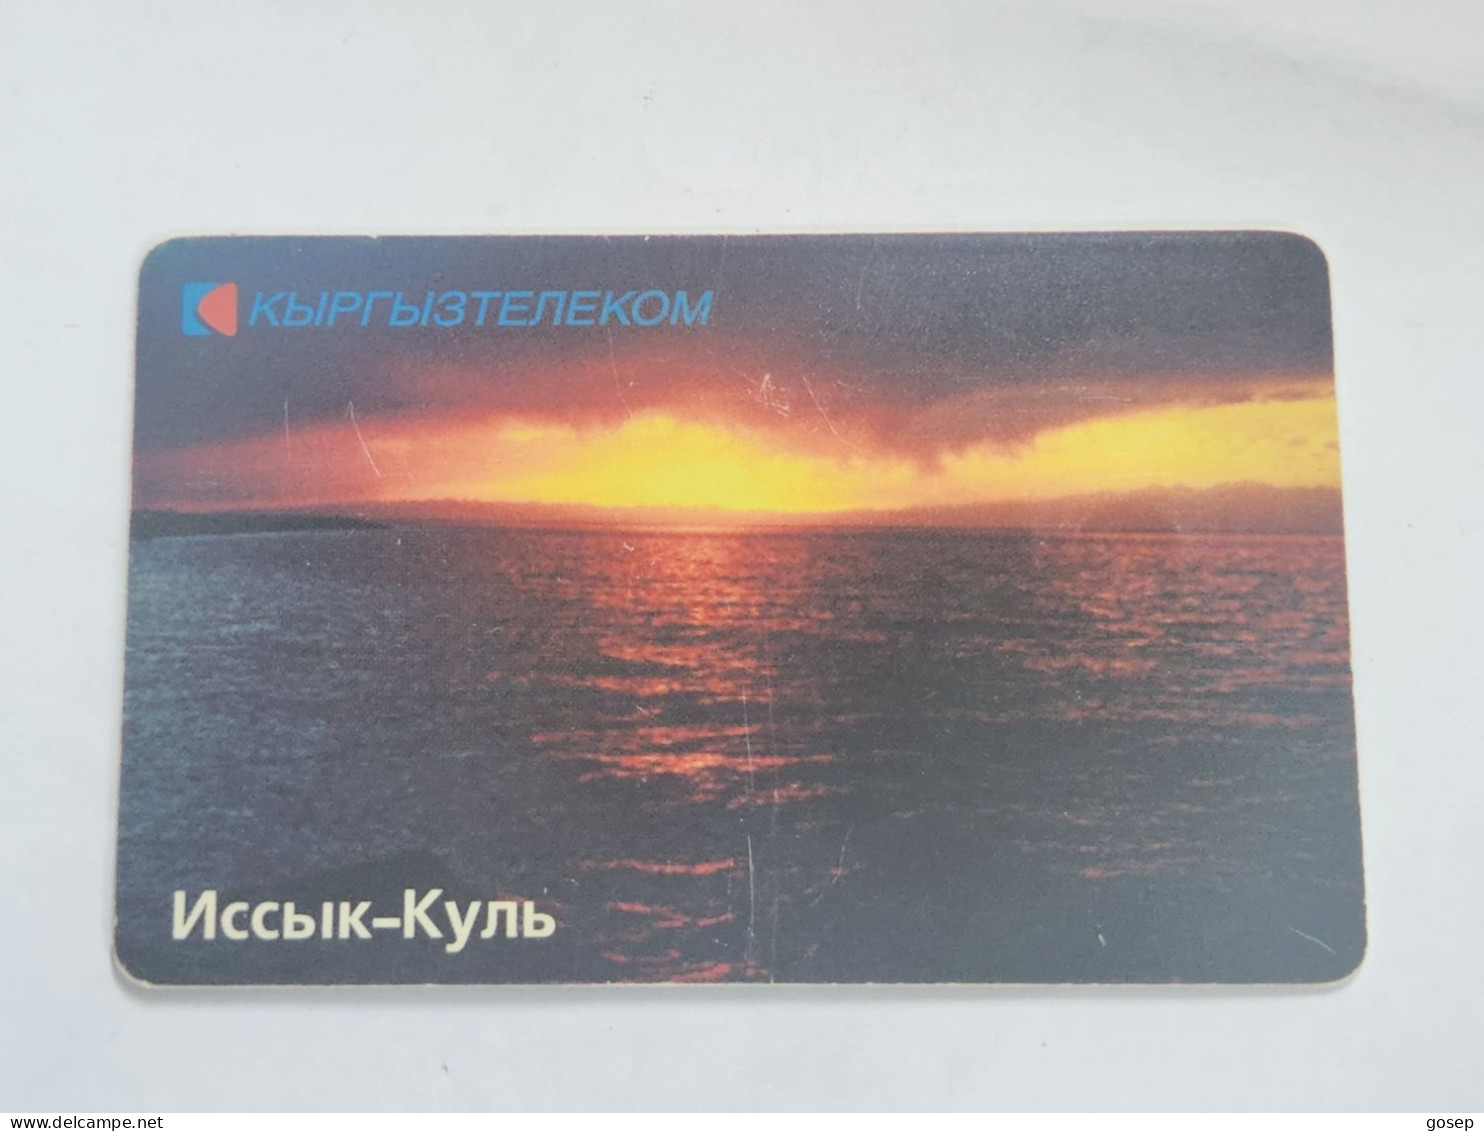 KYRGYZSTAN-(KG-KYR-0015)-lake Lssyk-kul2-(28)-(50units)-(00374013)-(tirage-50.000)-used Card+1card Prepiad Free - Kyrgyzstan